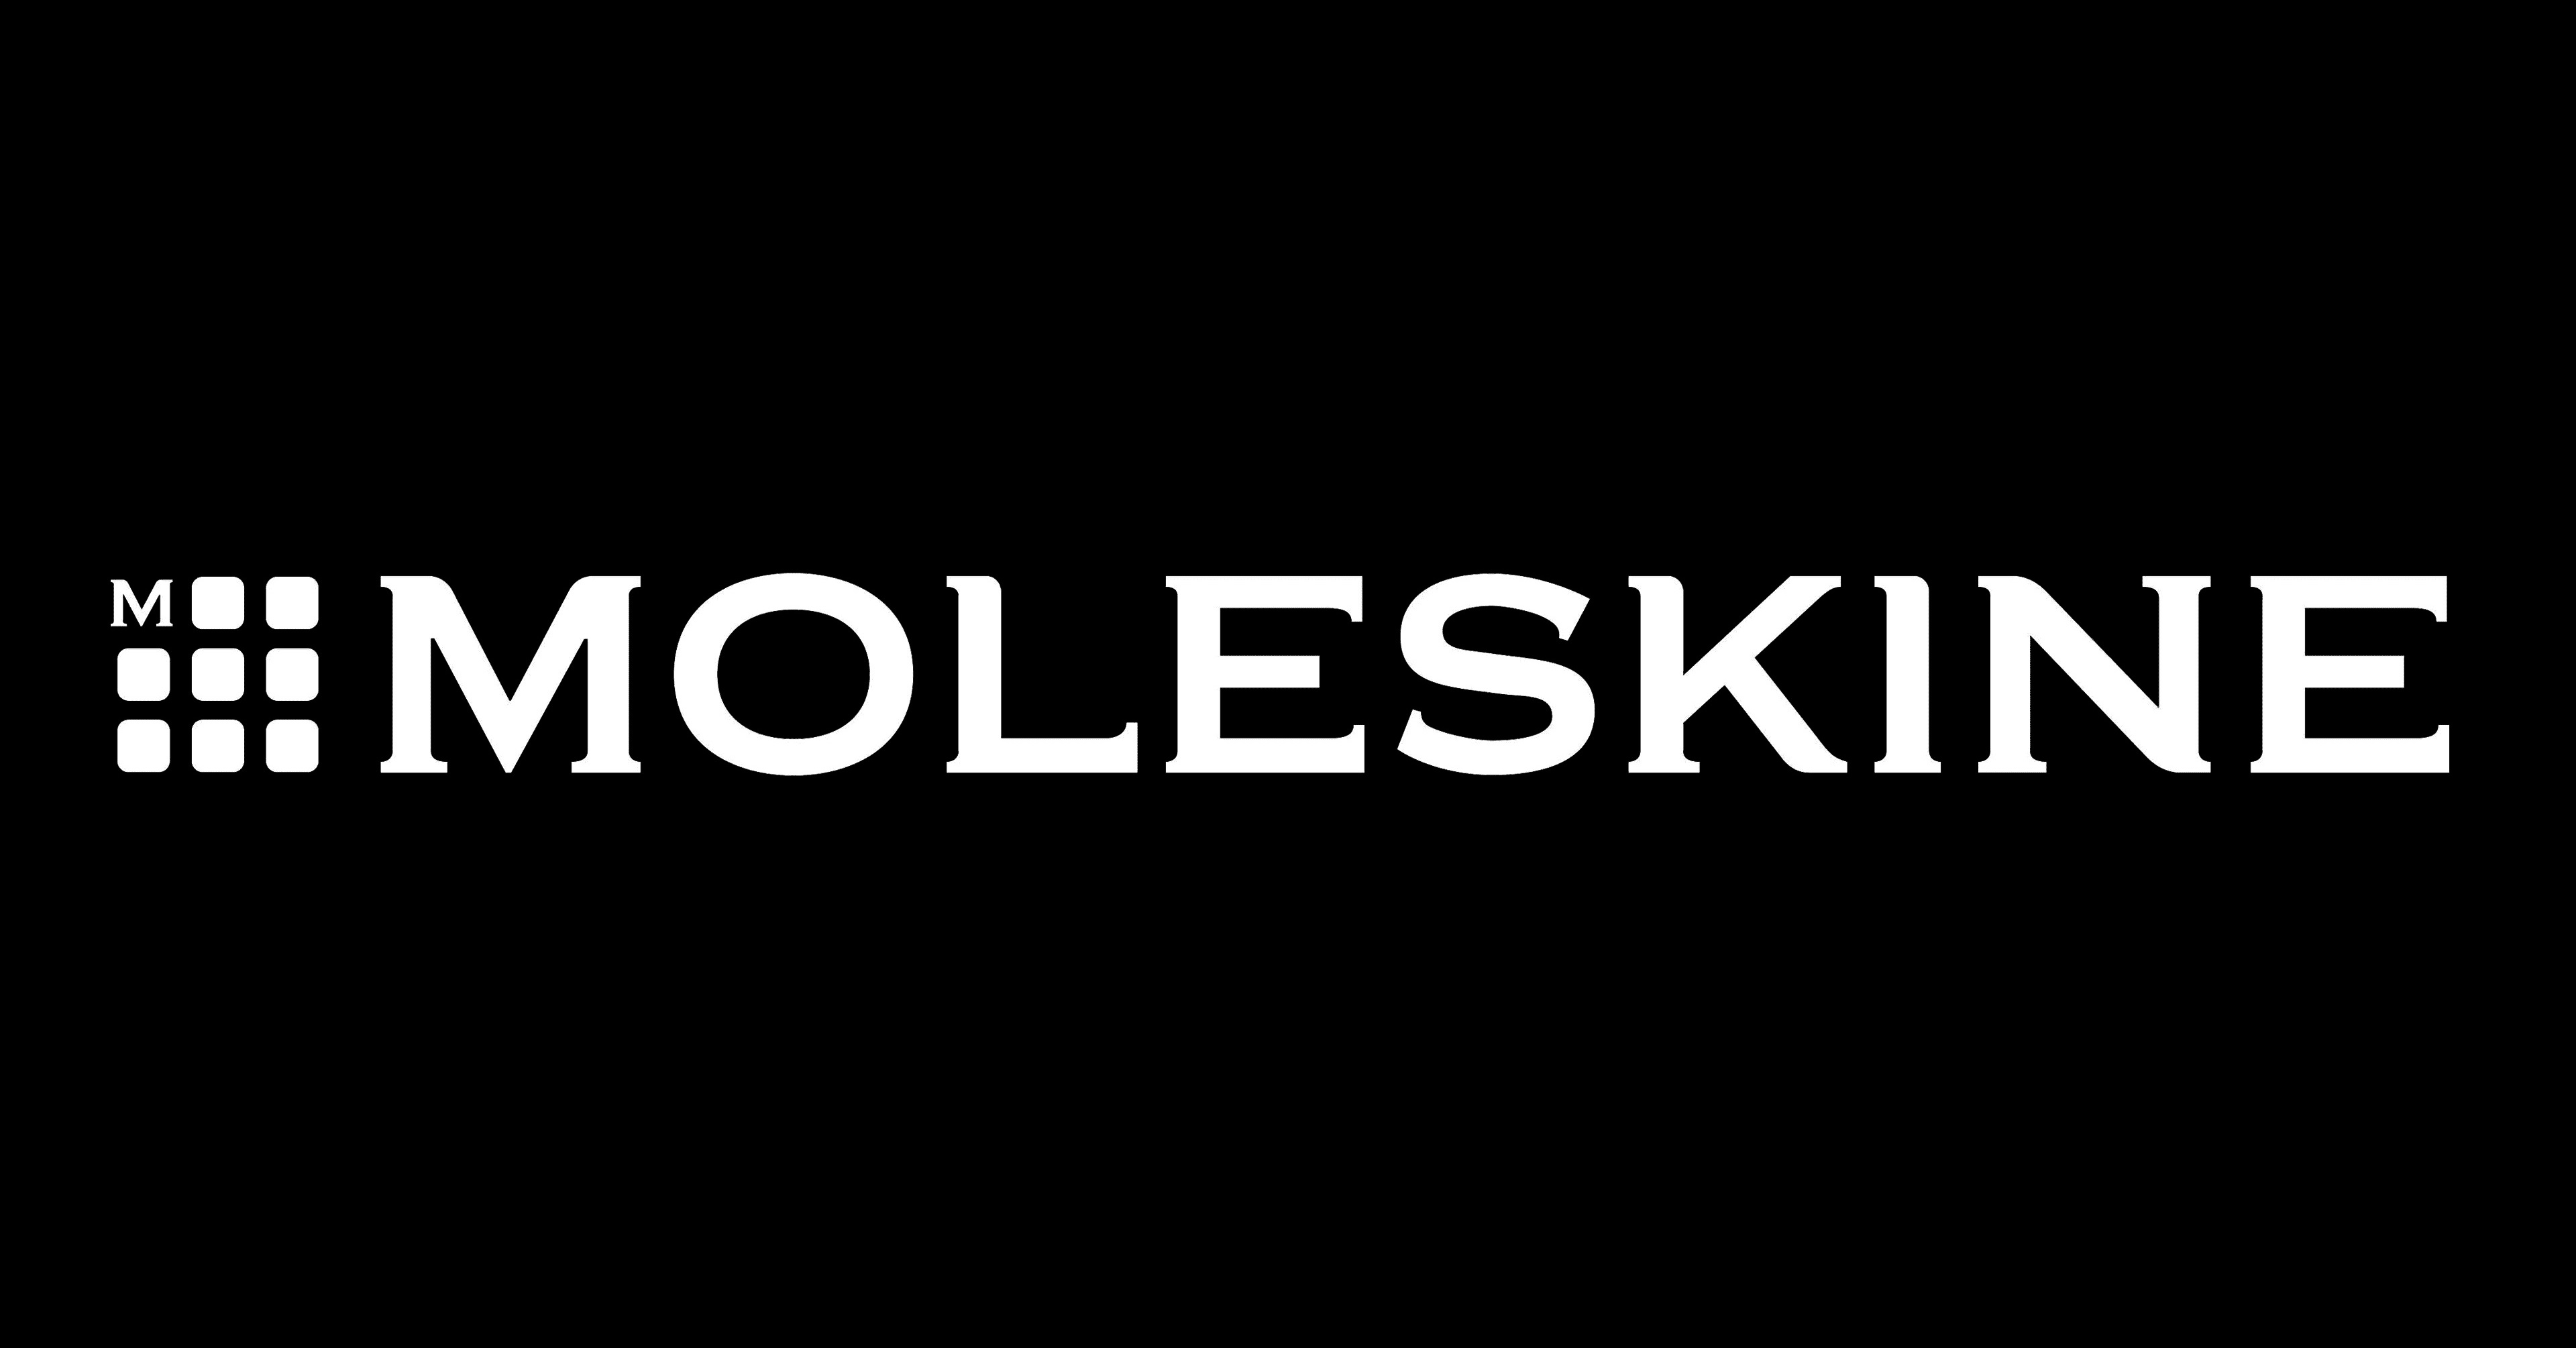 www.moleskine.com